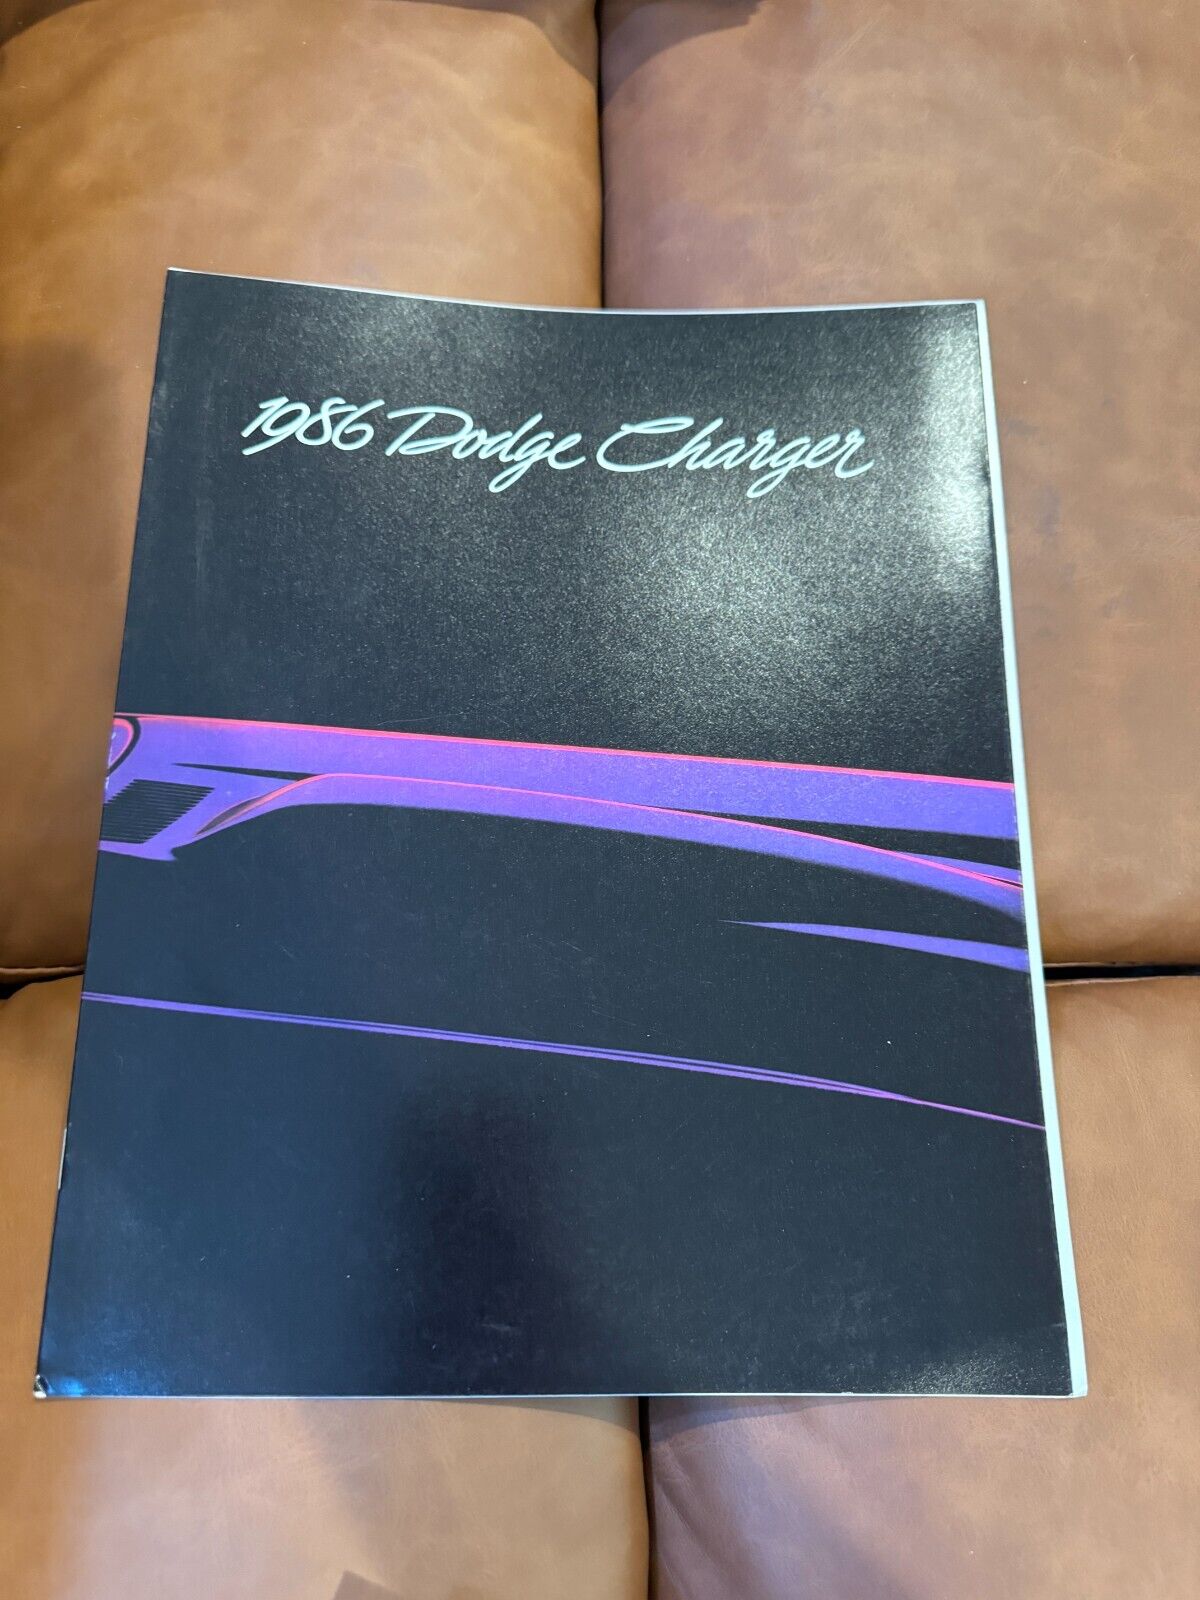 1986 Dodge Charger Original Sales Brochure - 16 Pages